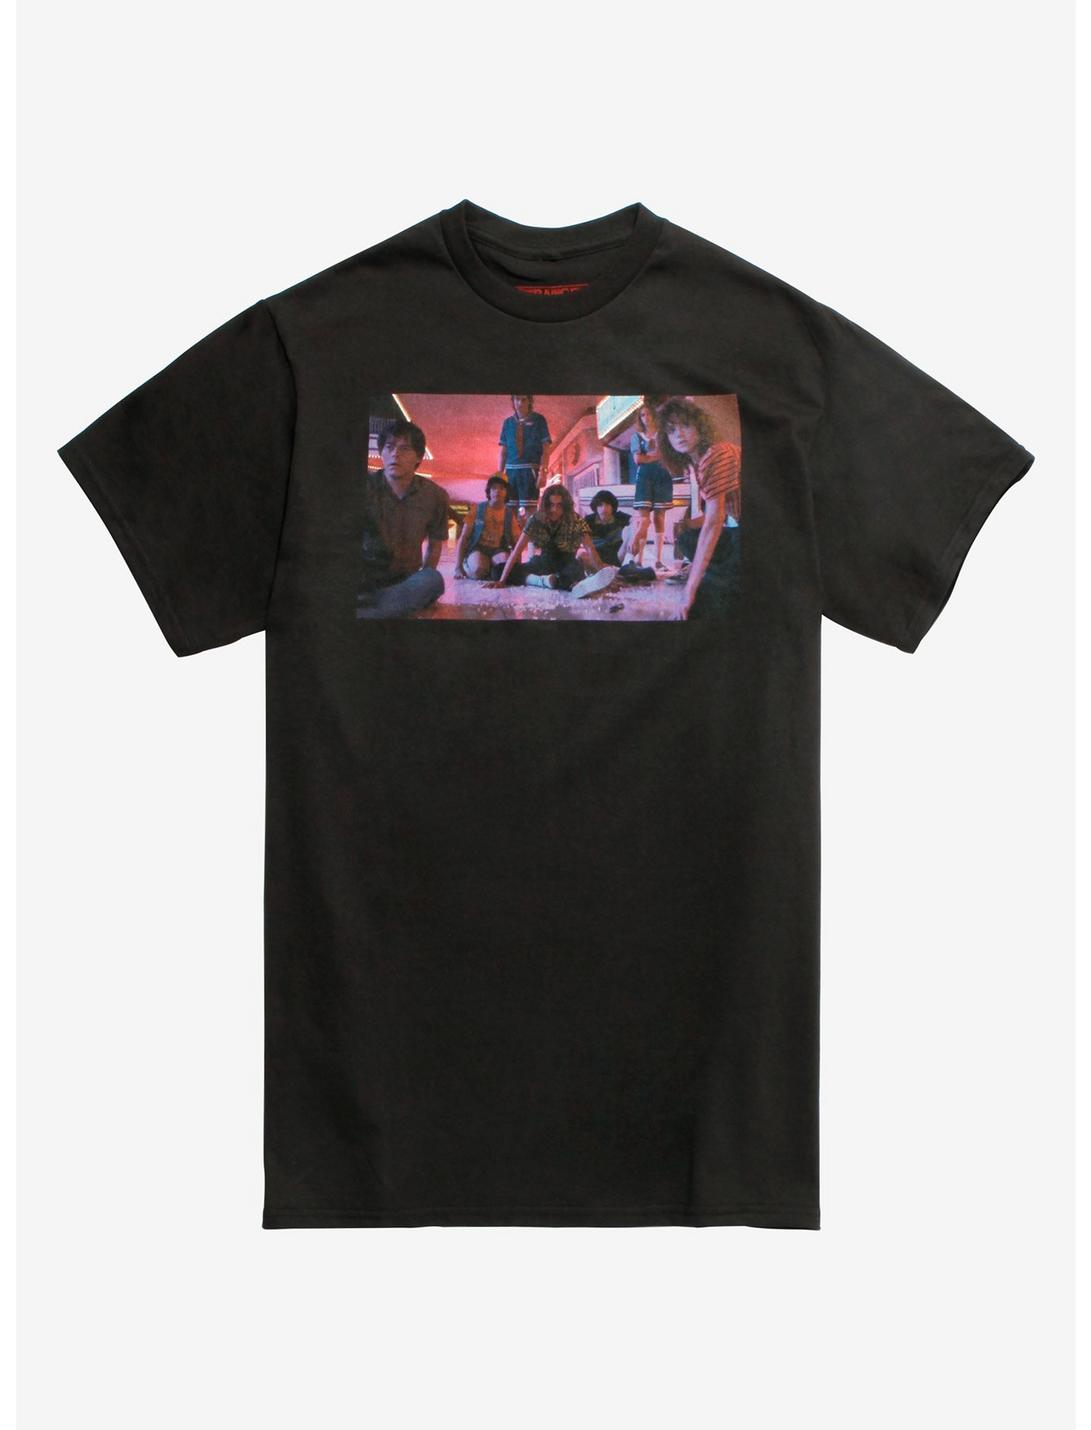 Stranger Things Mall Group Photo T-Shirt | Hot Topic